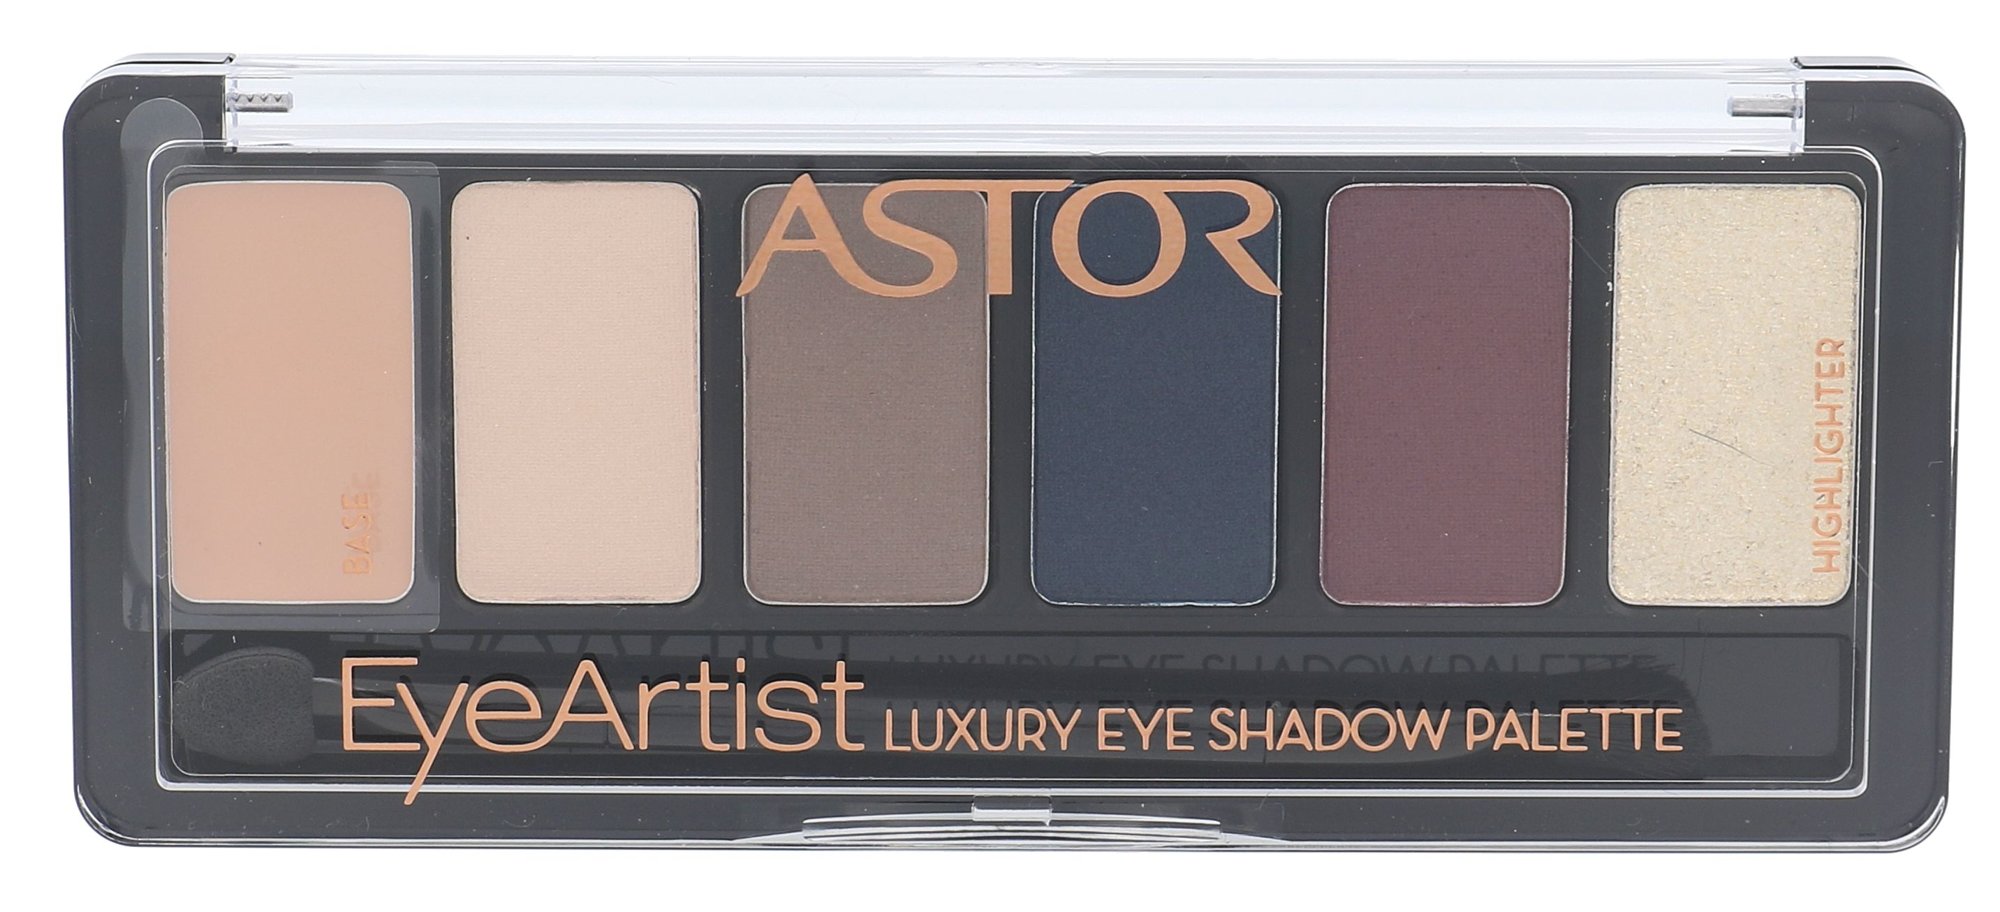 Astor Eye Artist Luxury 5,6g šešėliai